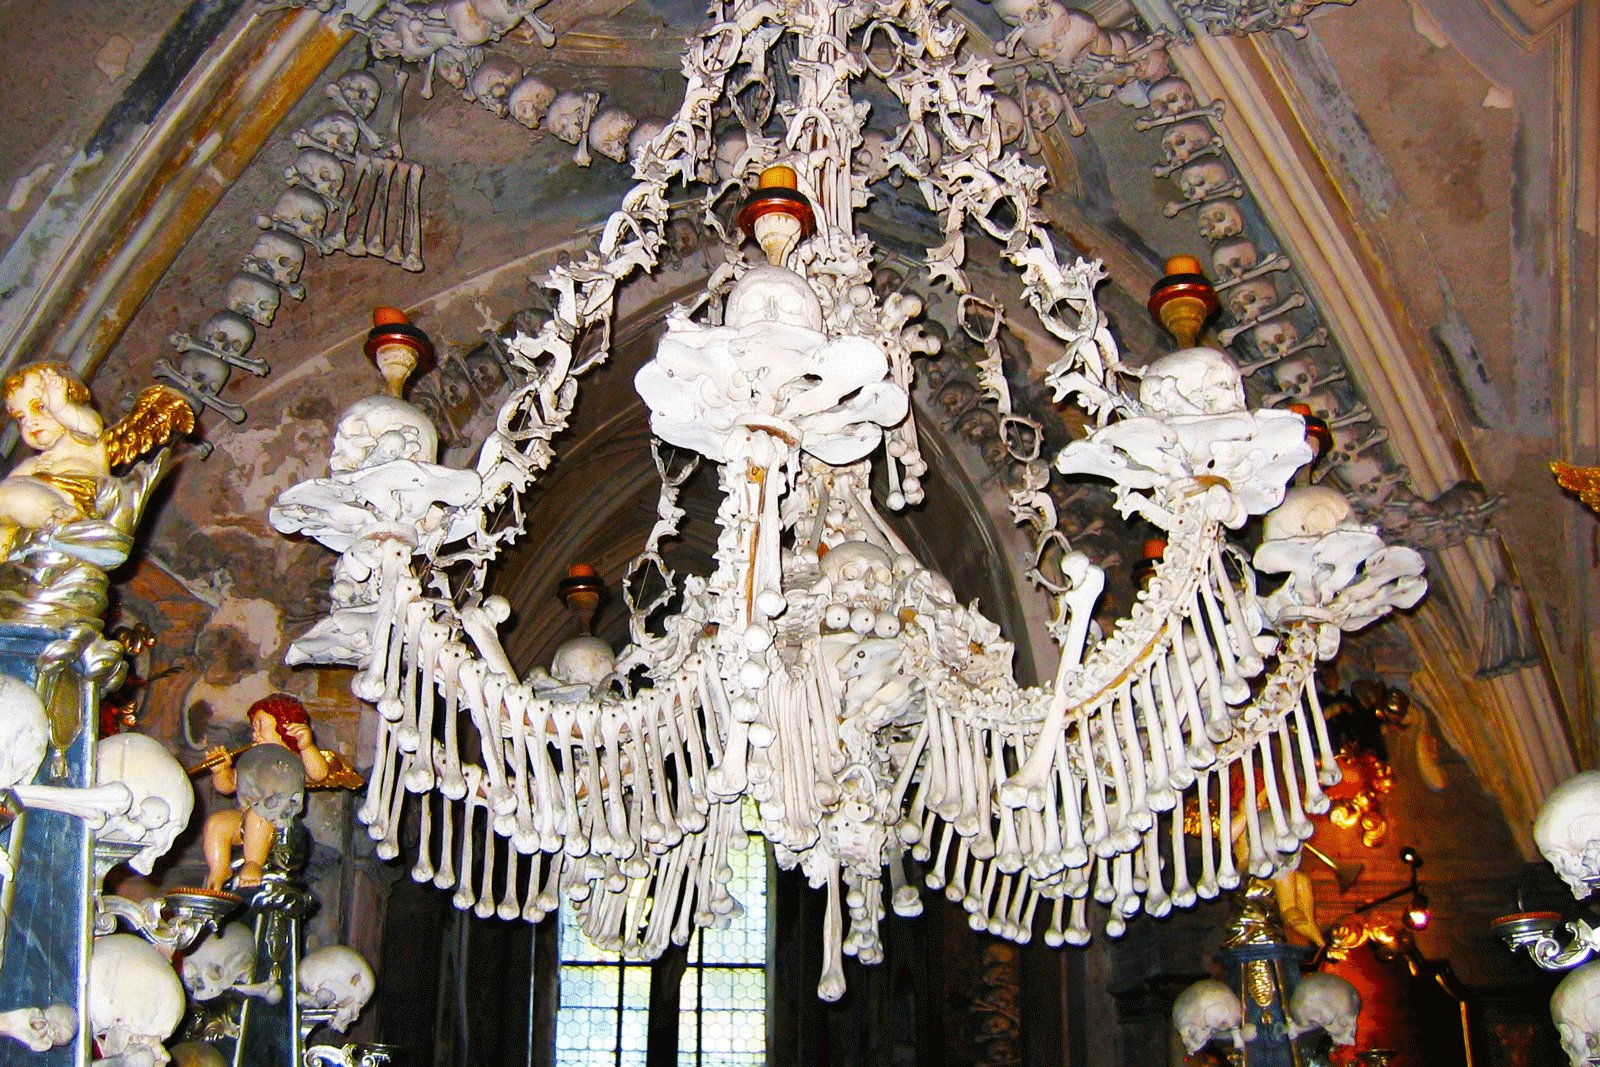 How to see human bone chandelier in Prague